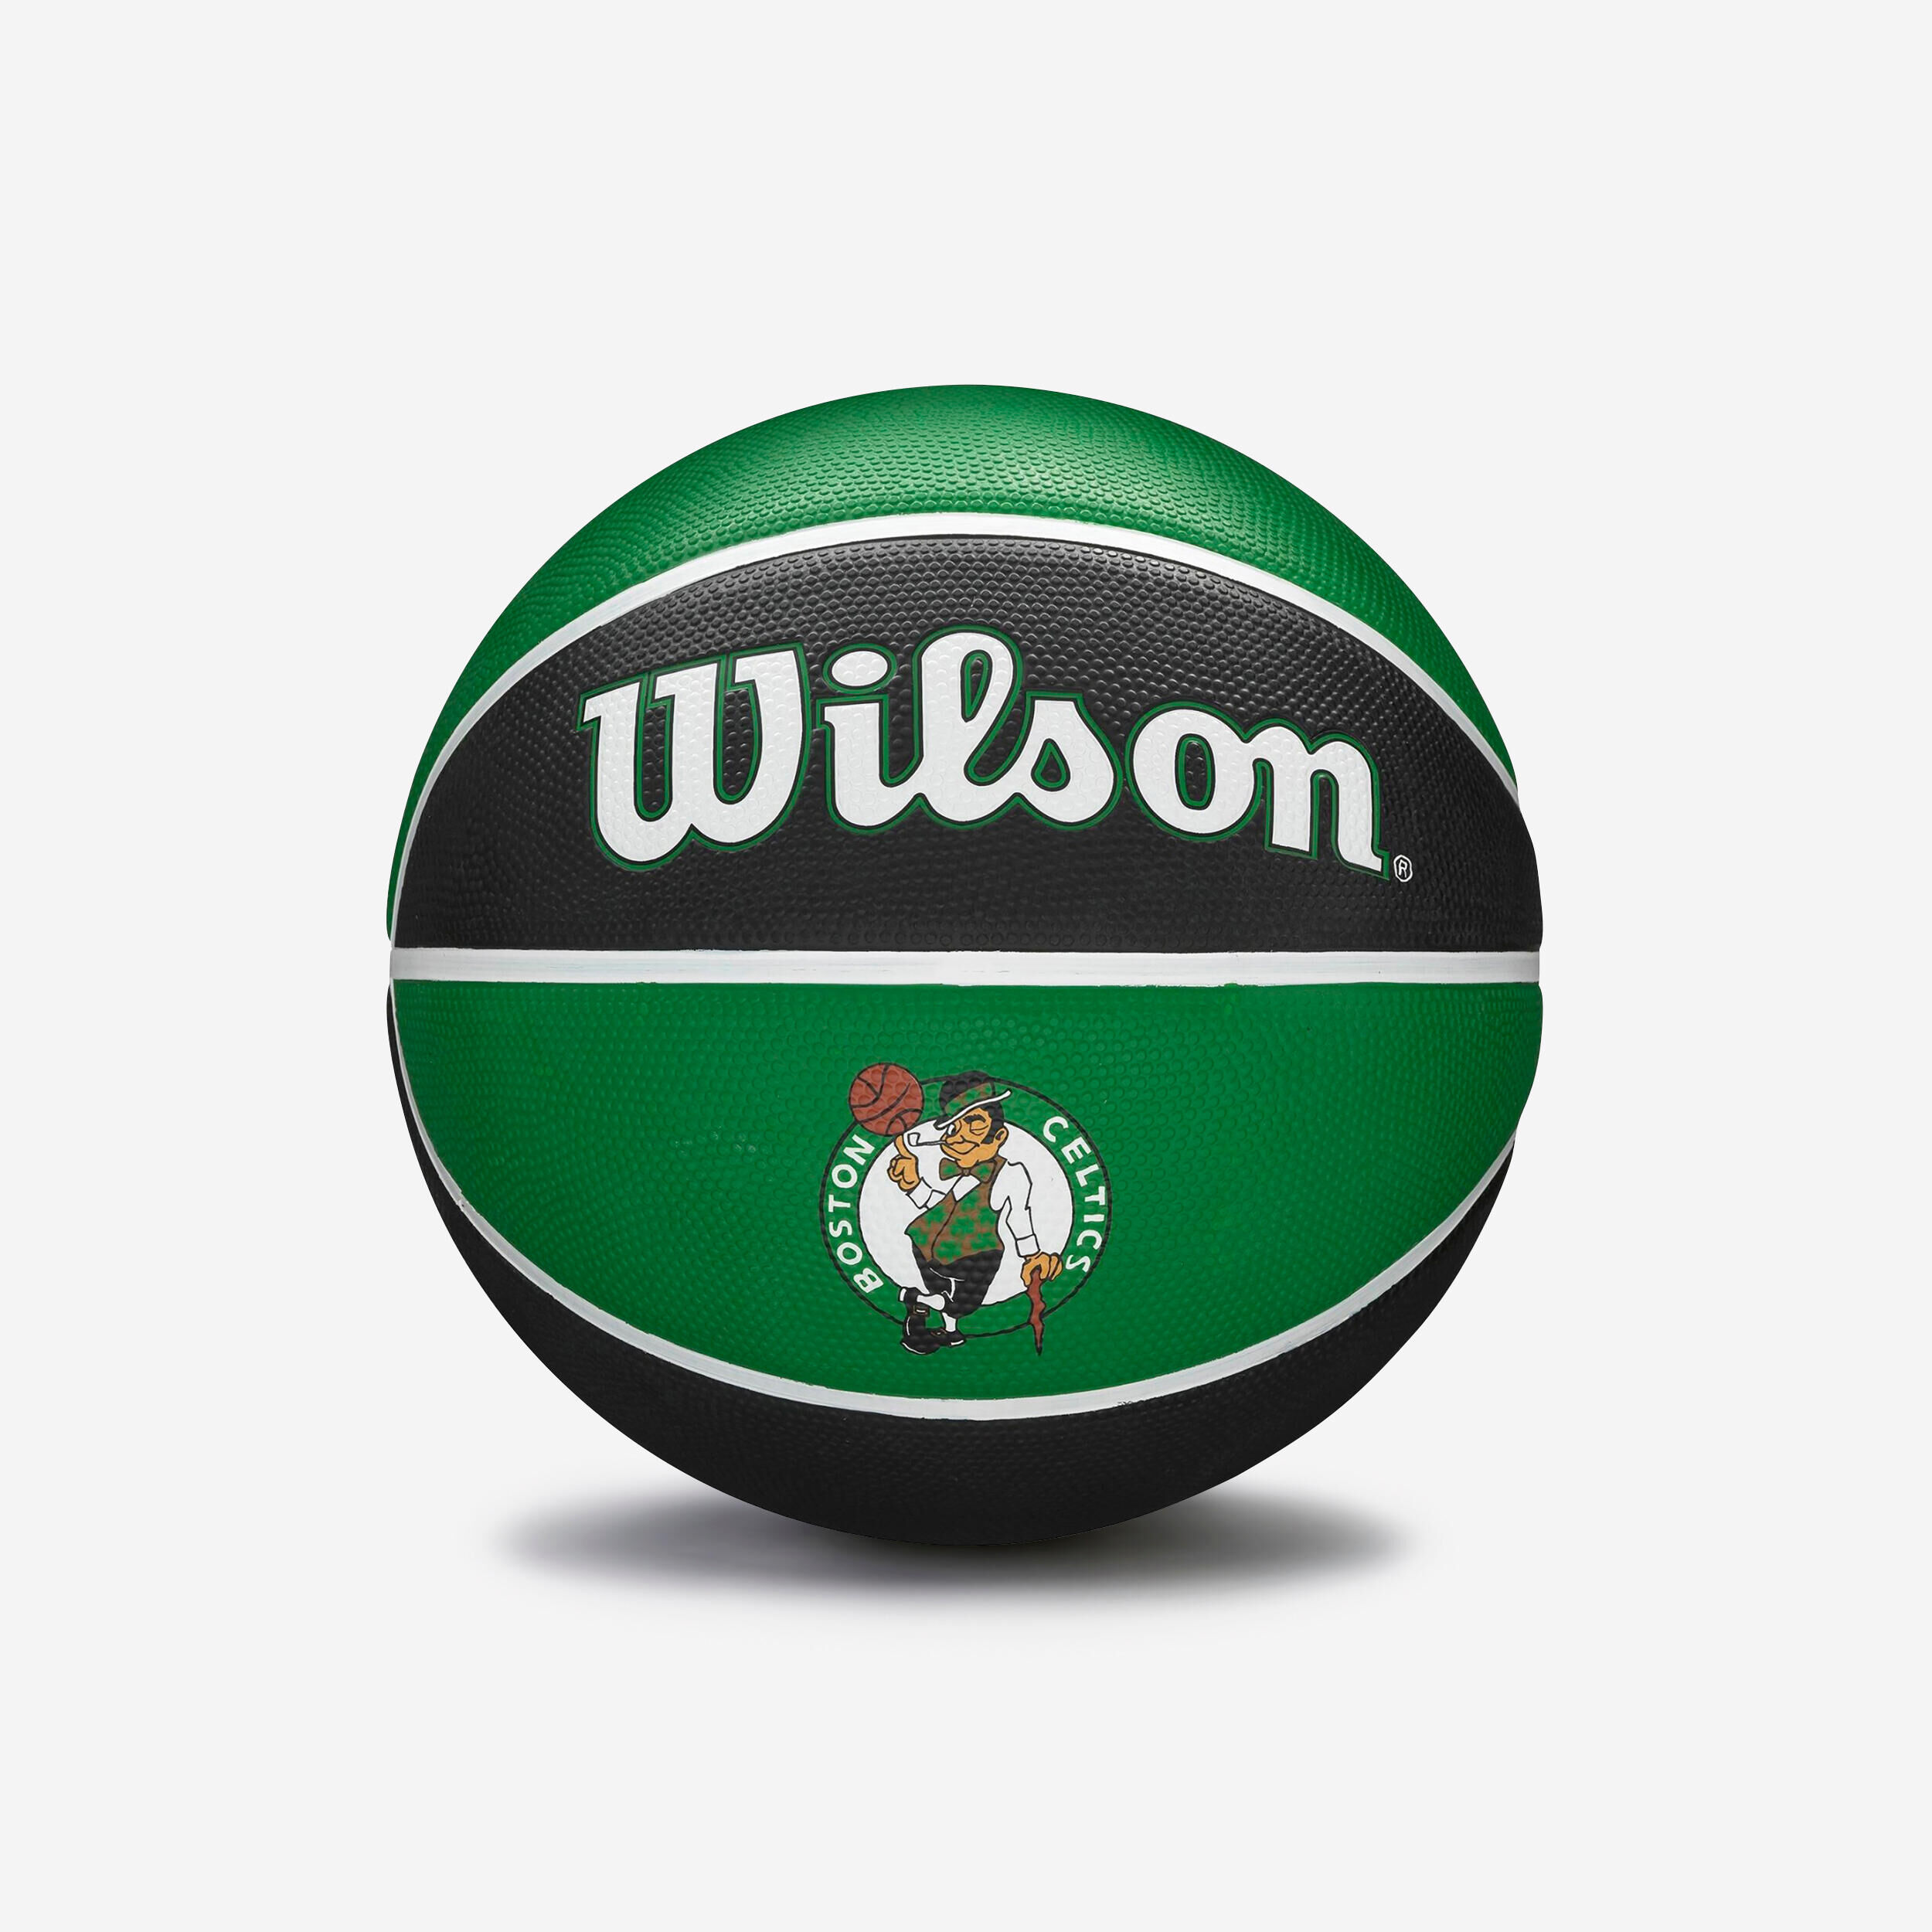 WILSON Size 7 Basketball NBA Team Tribute Celtics - Green/Black